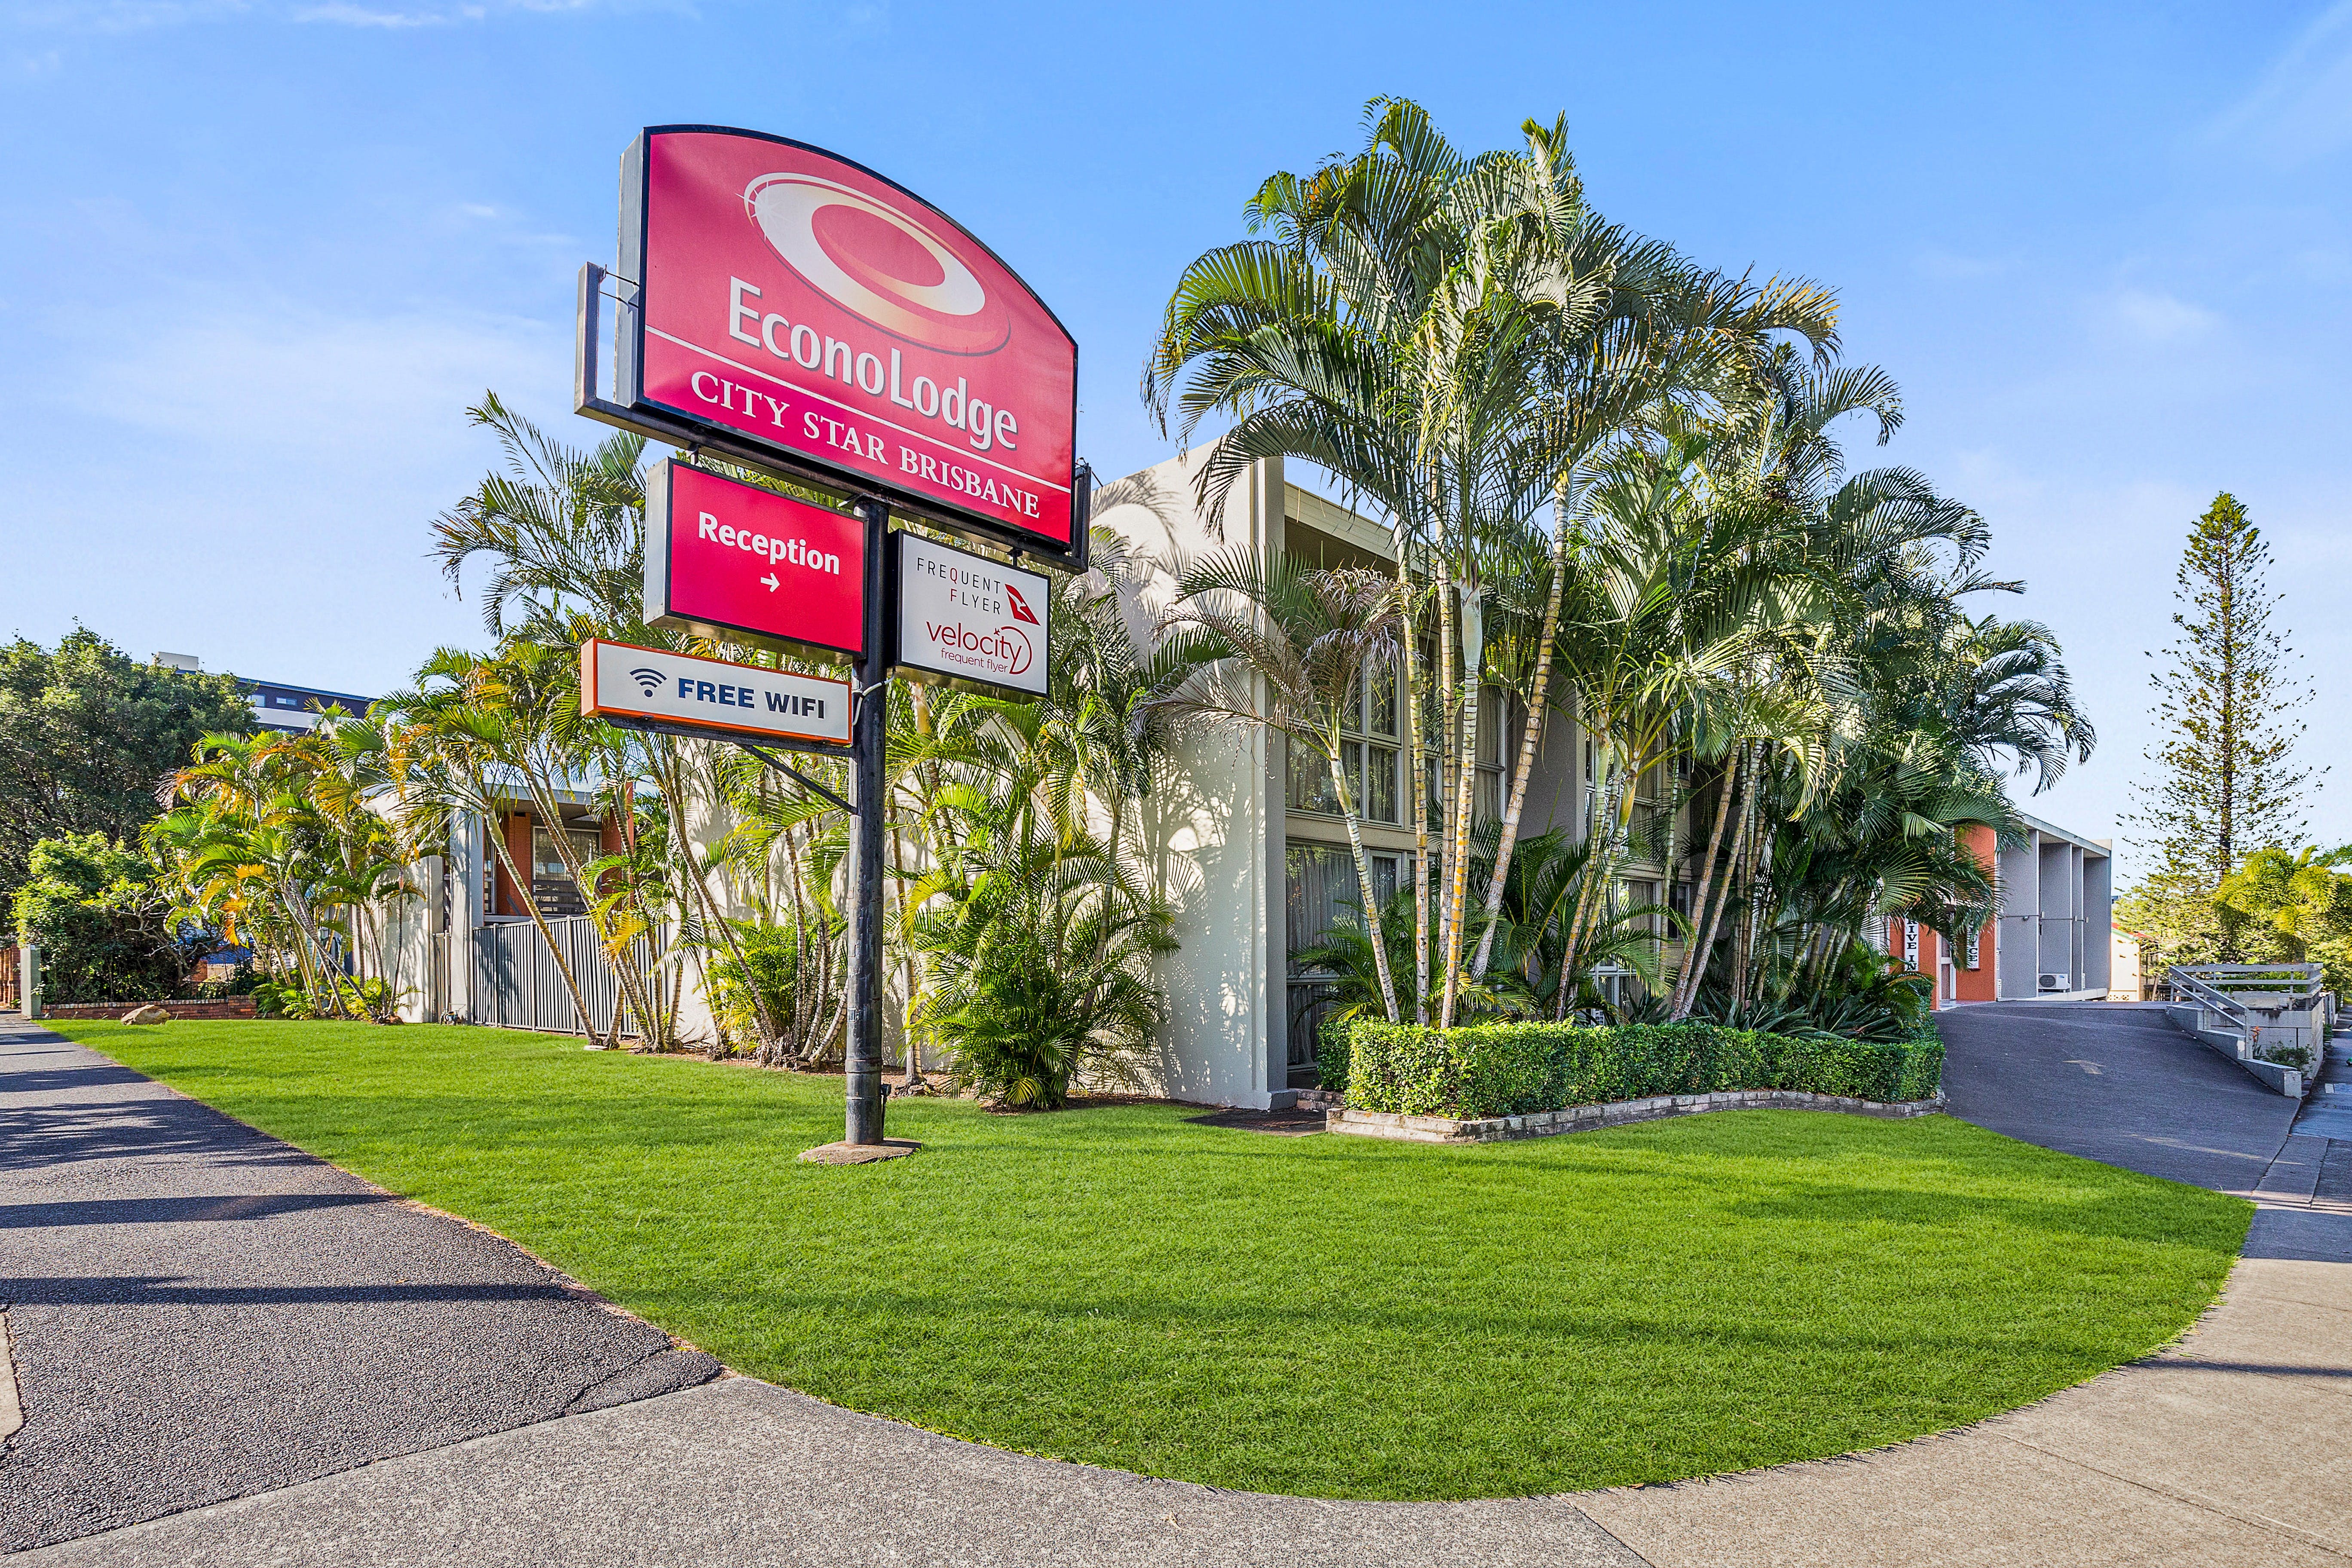 Econo Lodge City Star Brisbane - Coogee Beach Accommodation